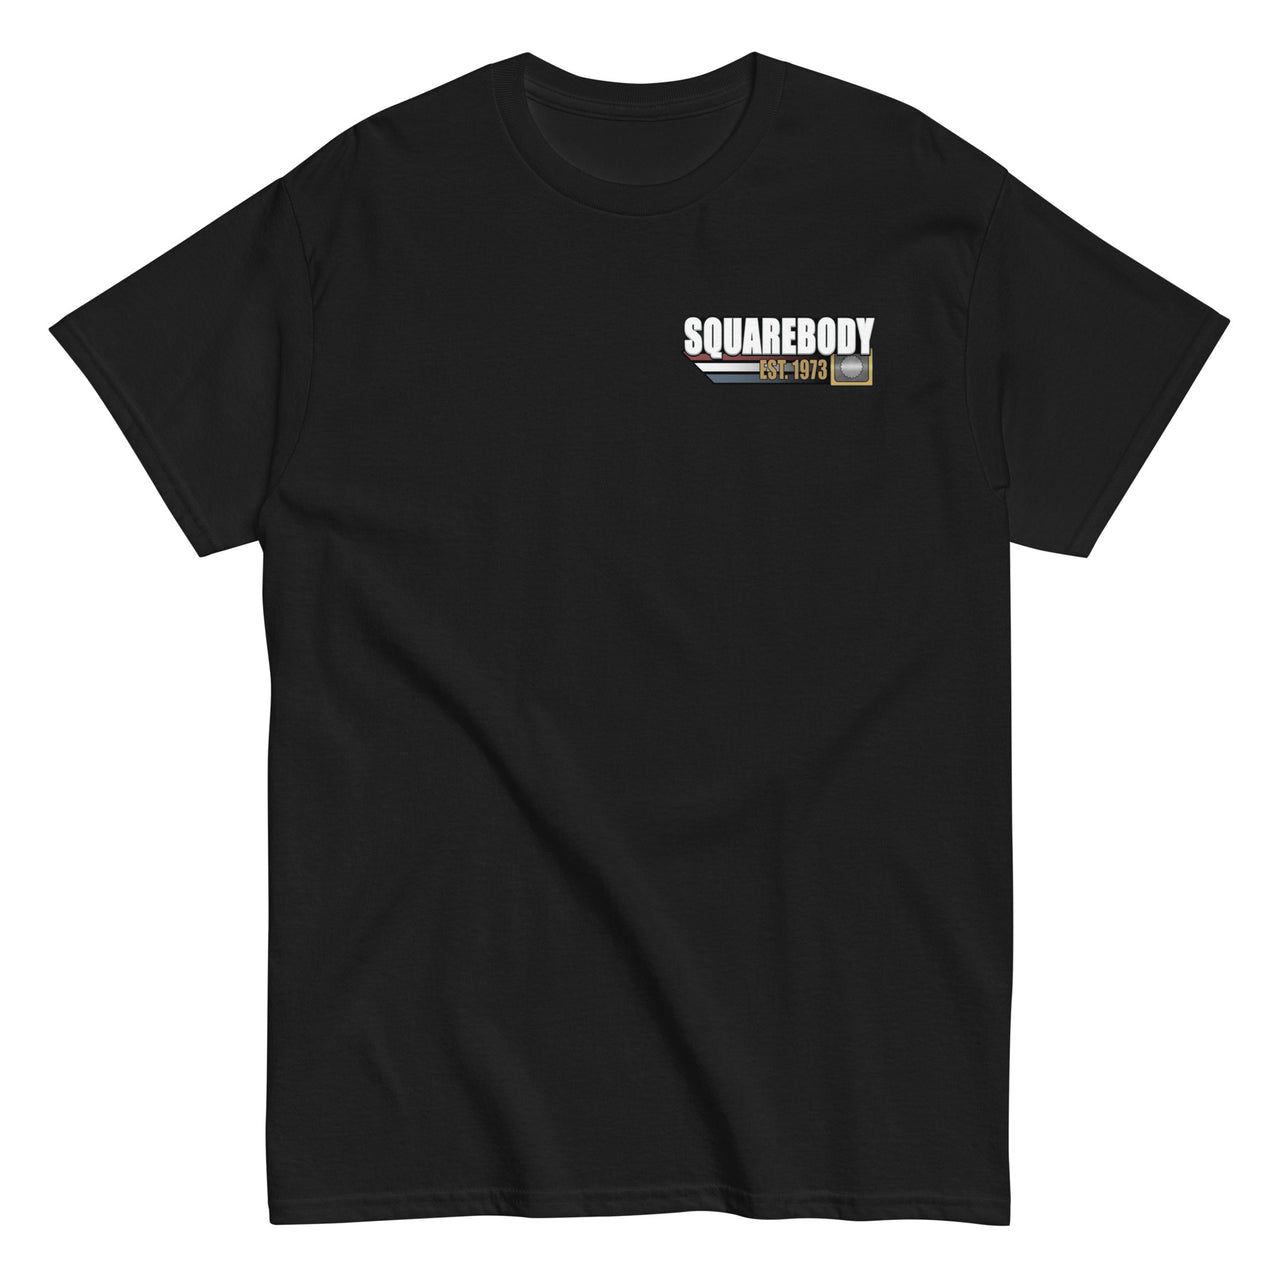 Square Body Truck T-Shirt Squarebody Est 1973 T-Shirt in black